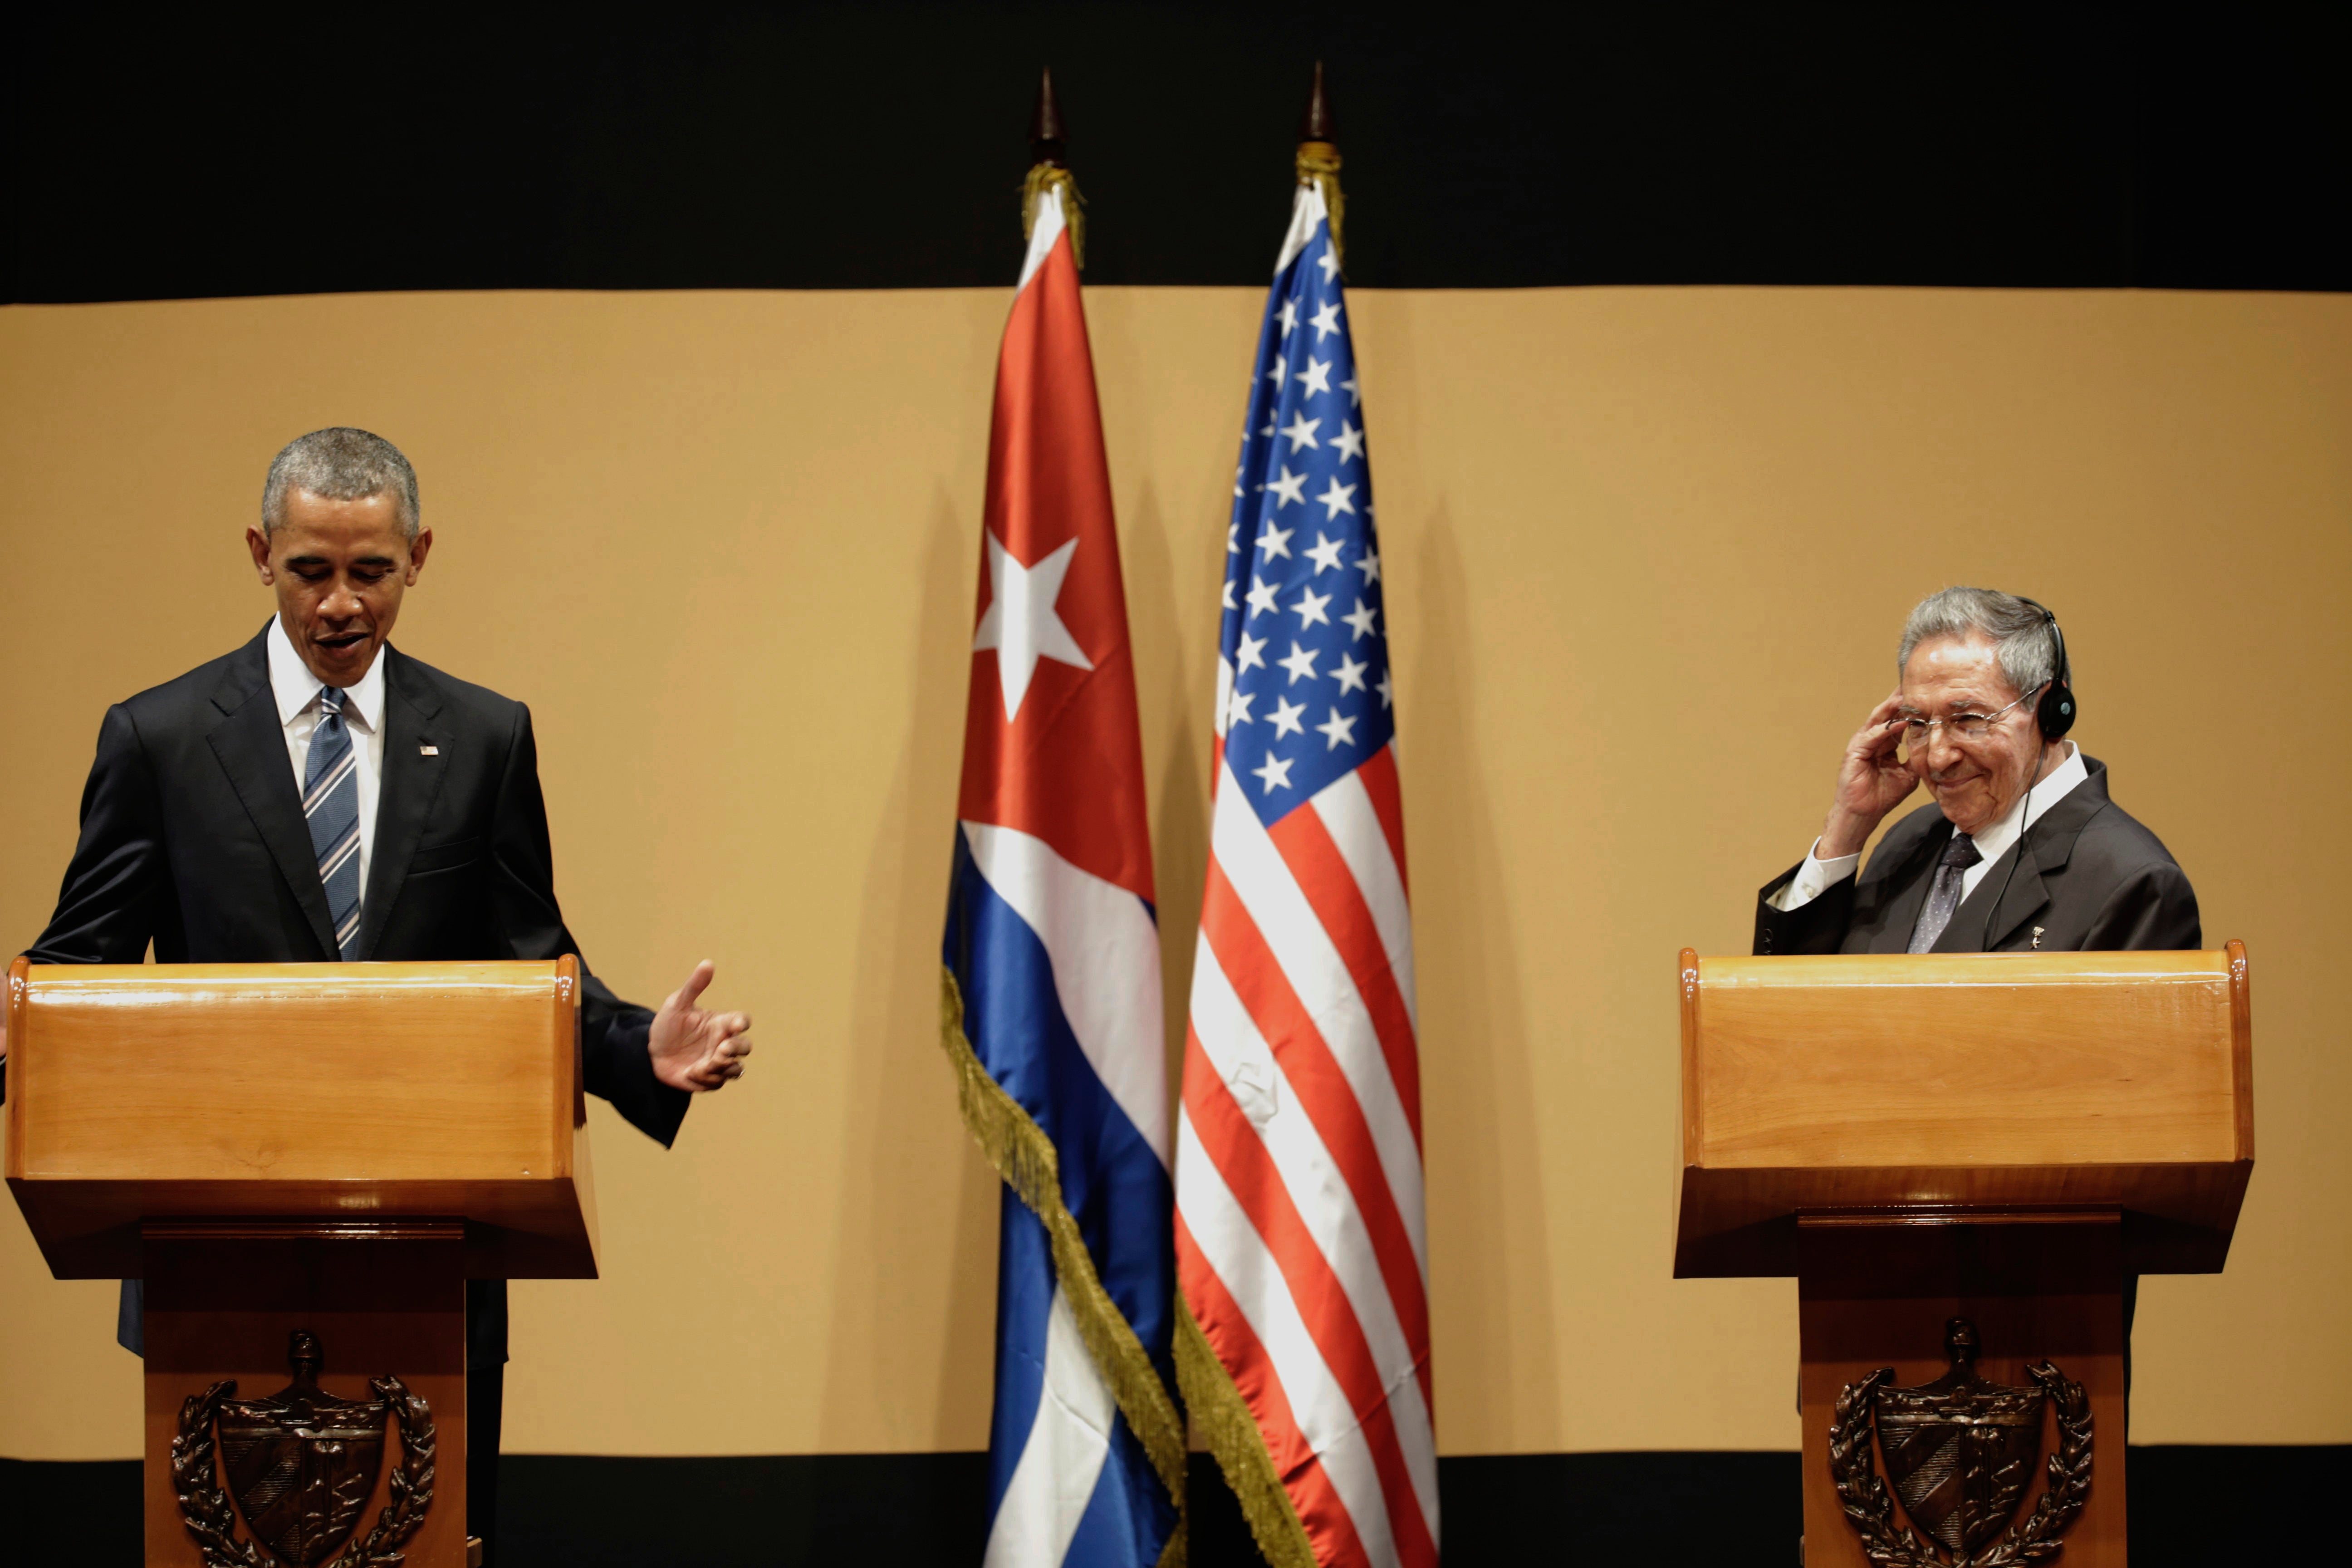 President Barack Obama’s historic visit to Cuba